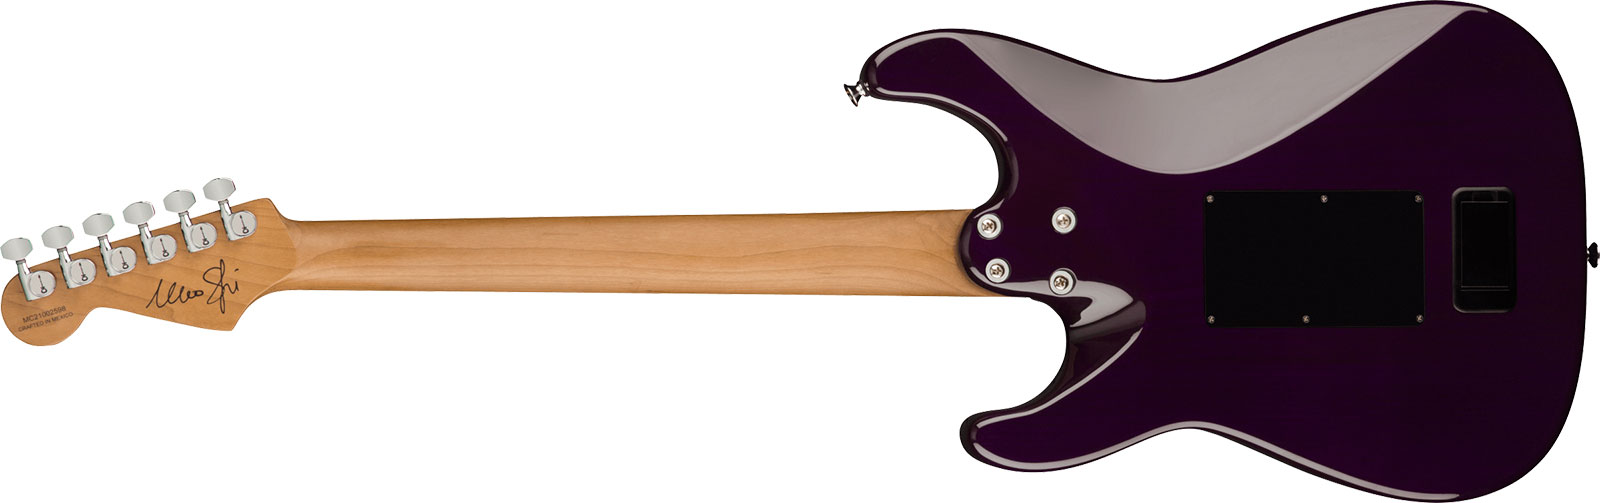 Charvel Marco Sfogli So Cal Style 1 Pro Mod Signature Hss Emg Fr Mn - Transparent Purple Burst - Guitarra eléctrica de autor - Variation 1